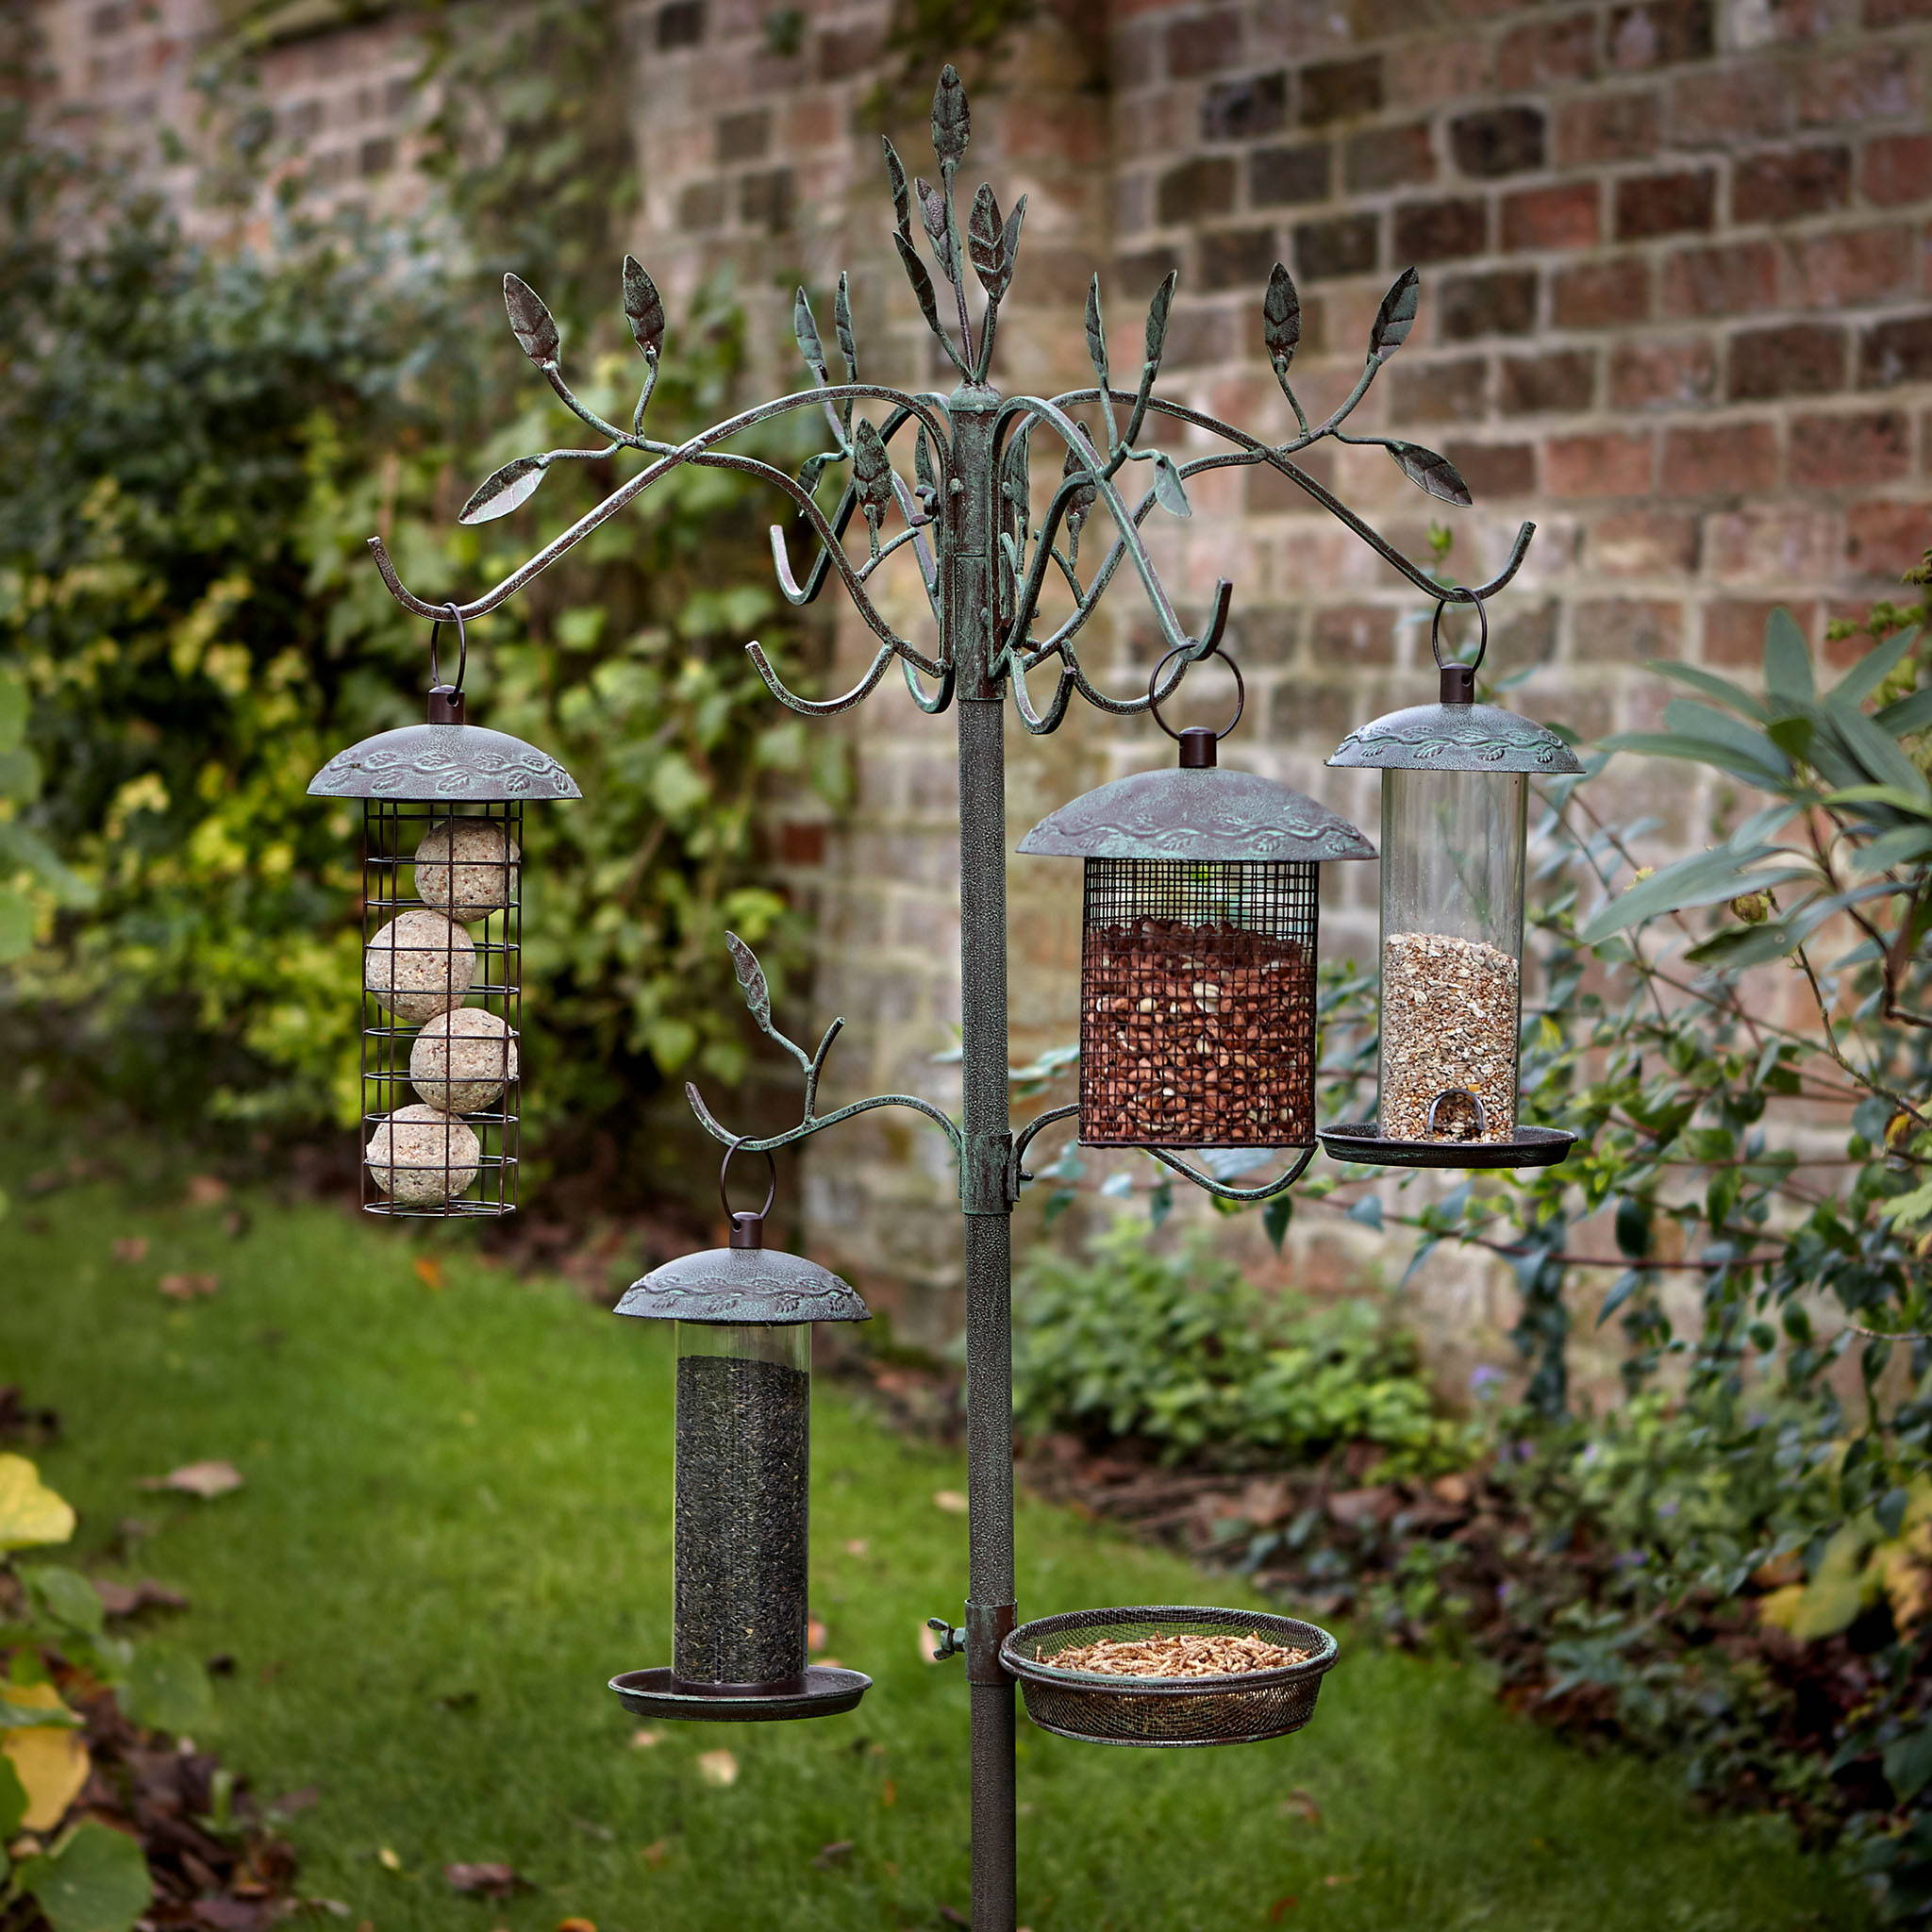 Peckish Secret Garden Dining Station with bird feeders on